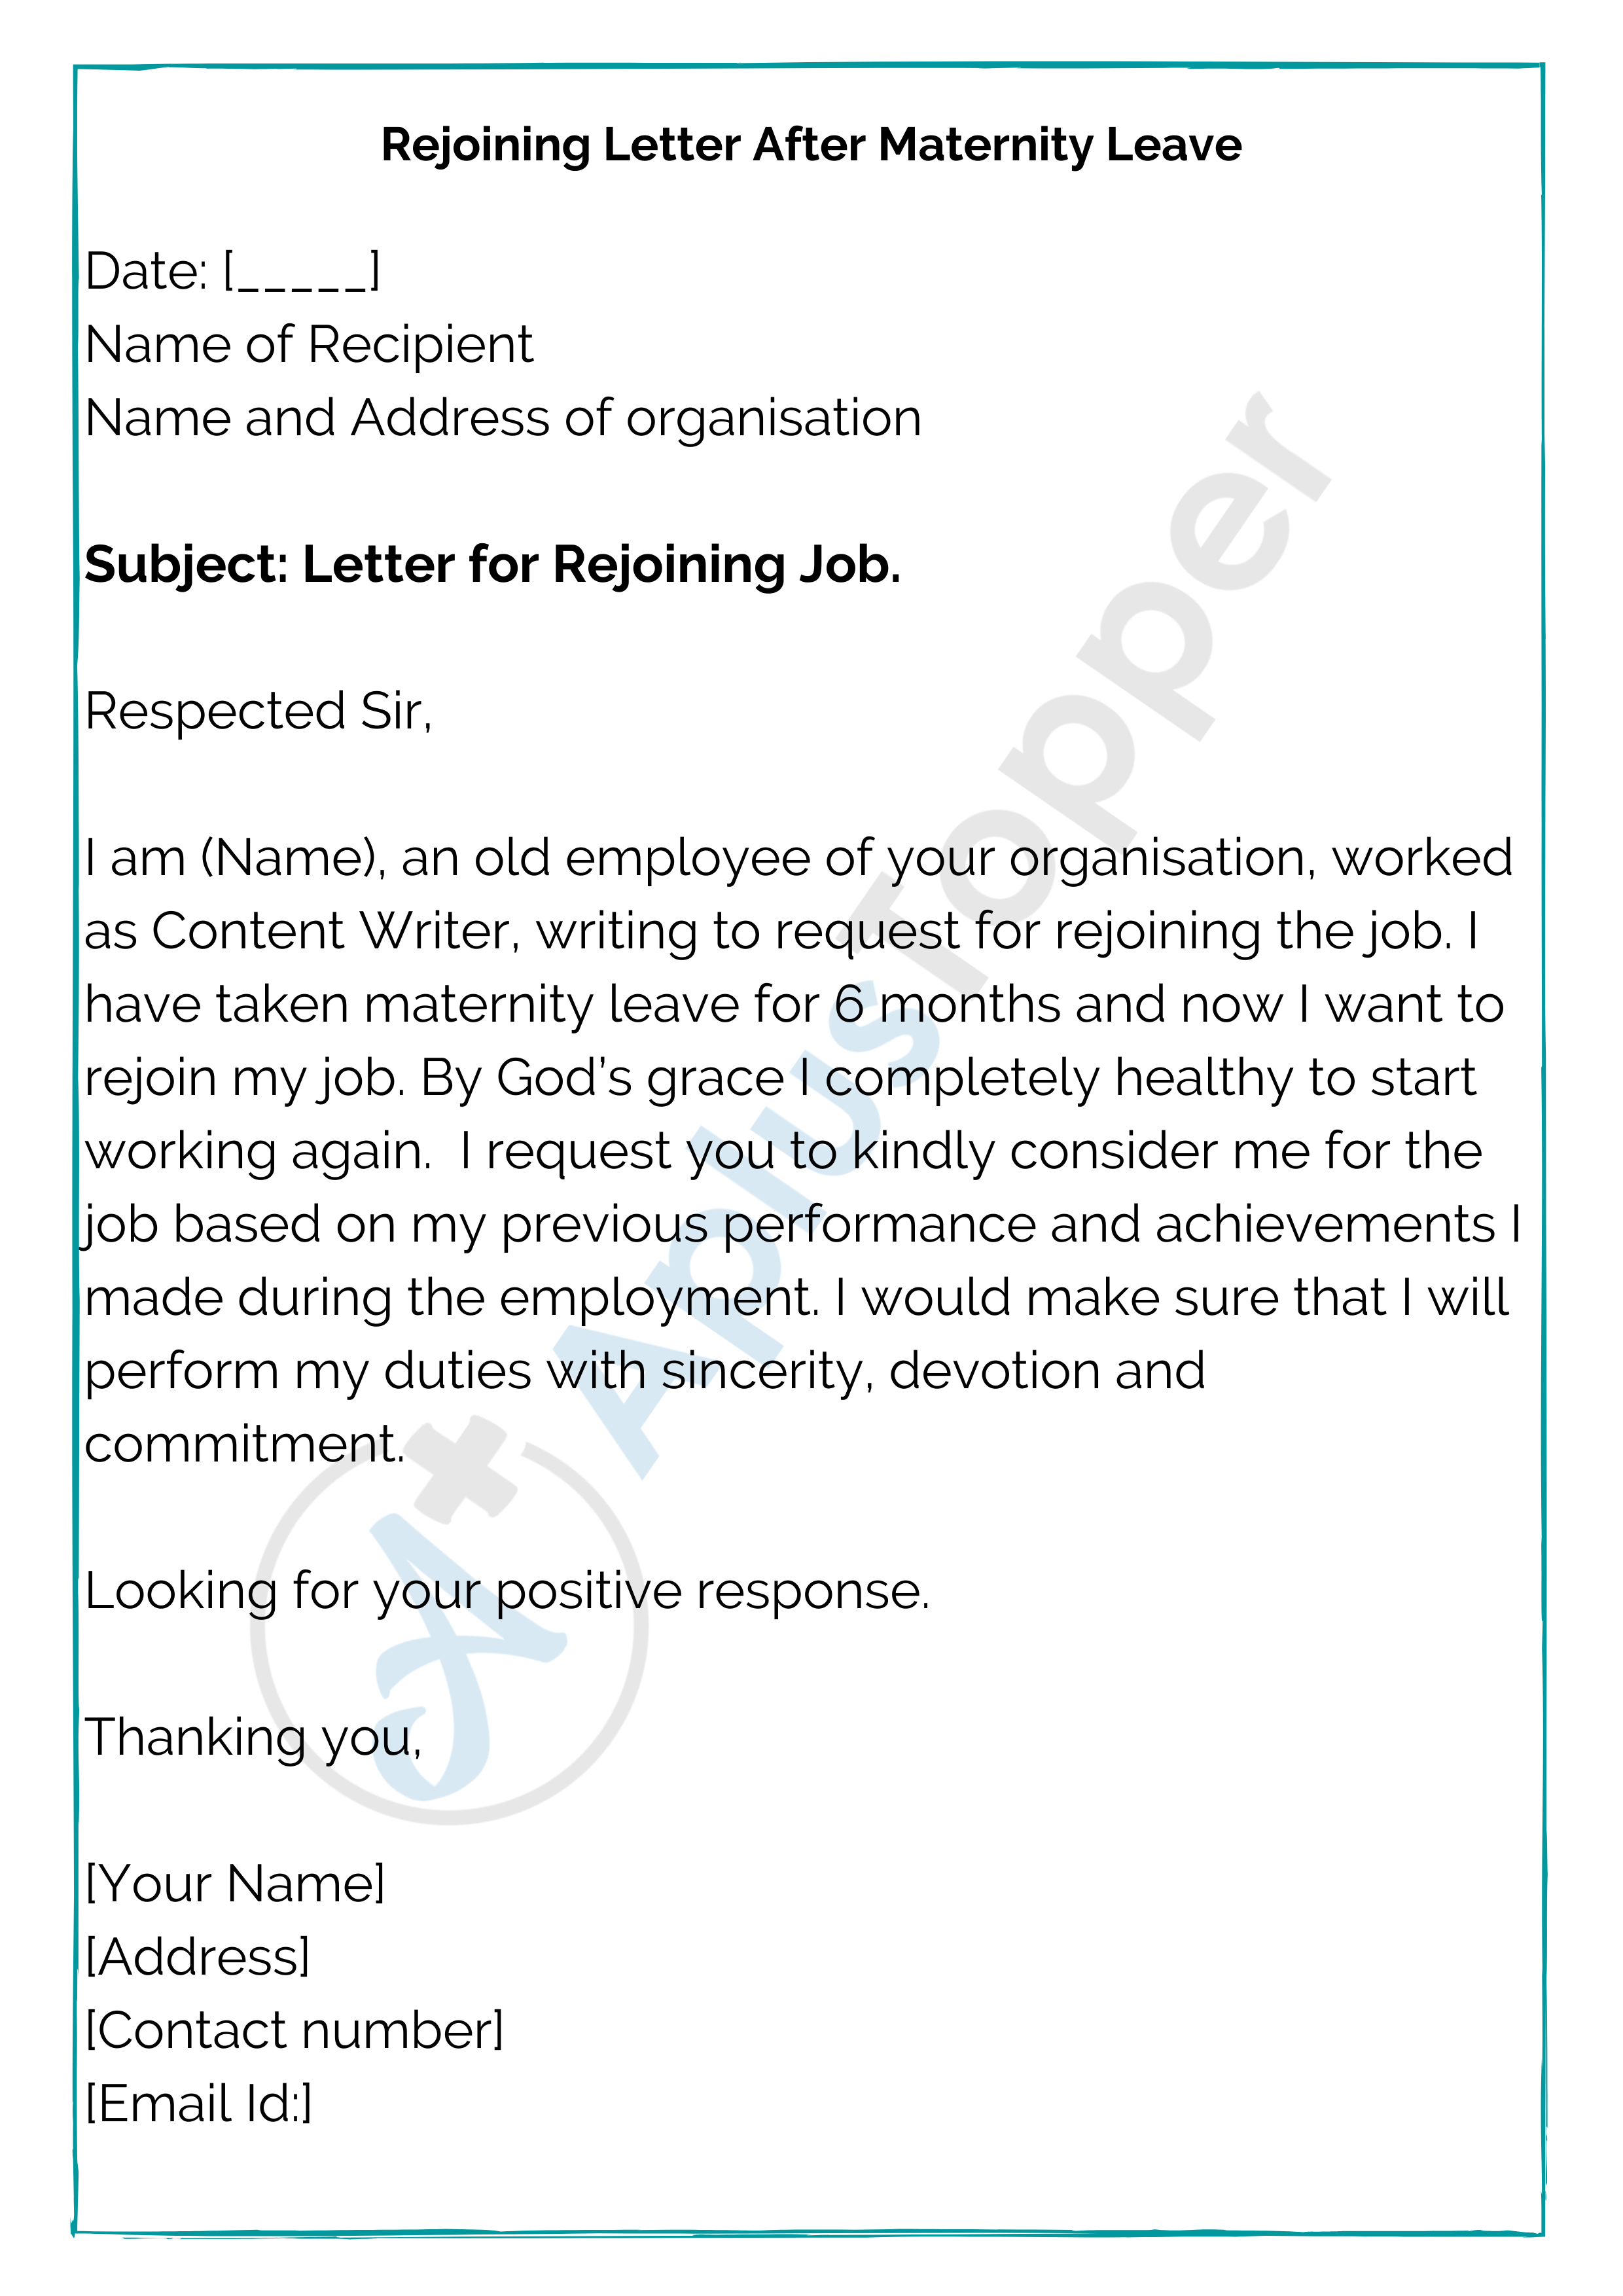 application letter for rejoining job